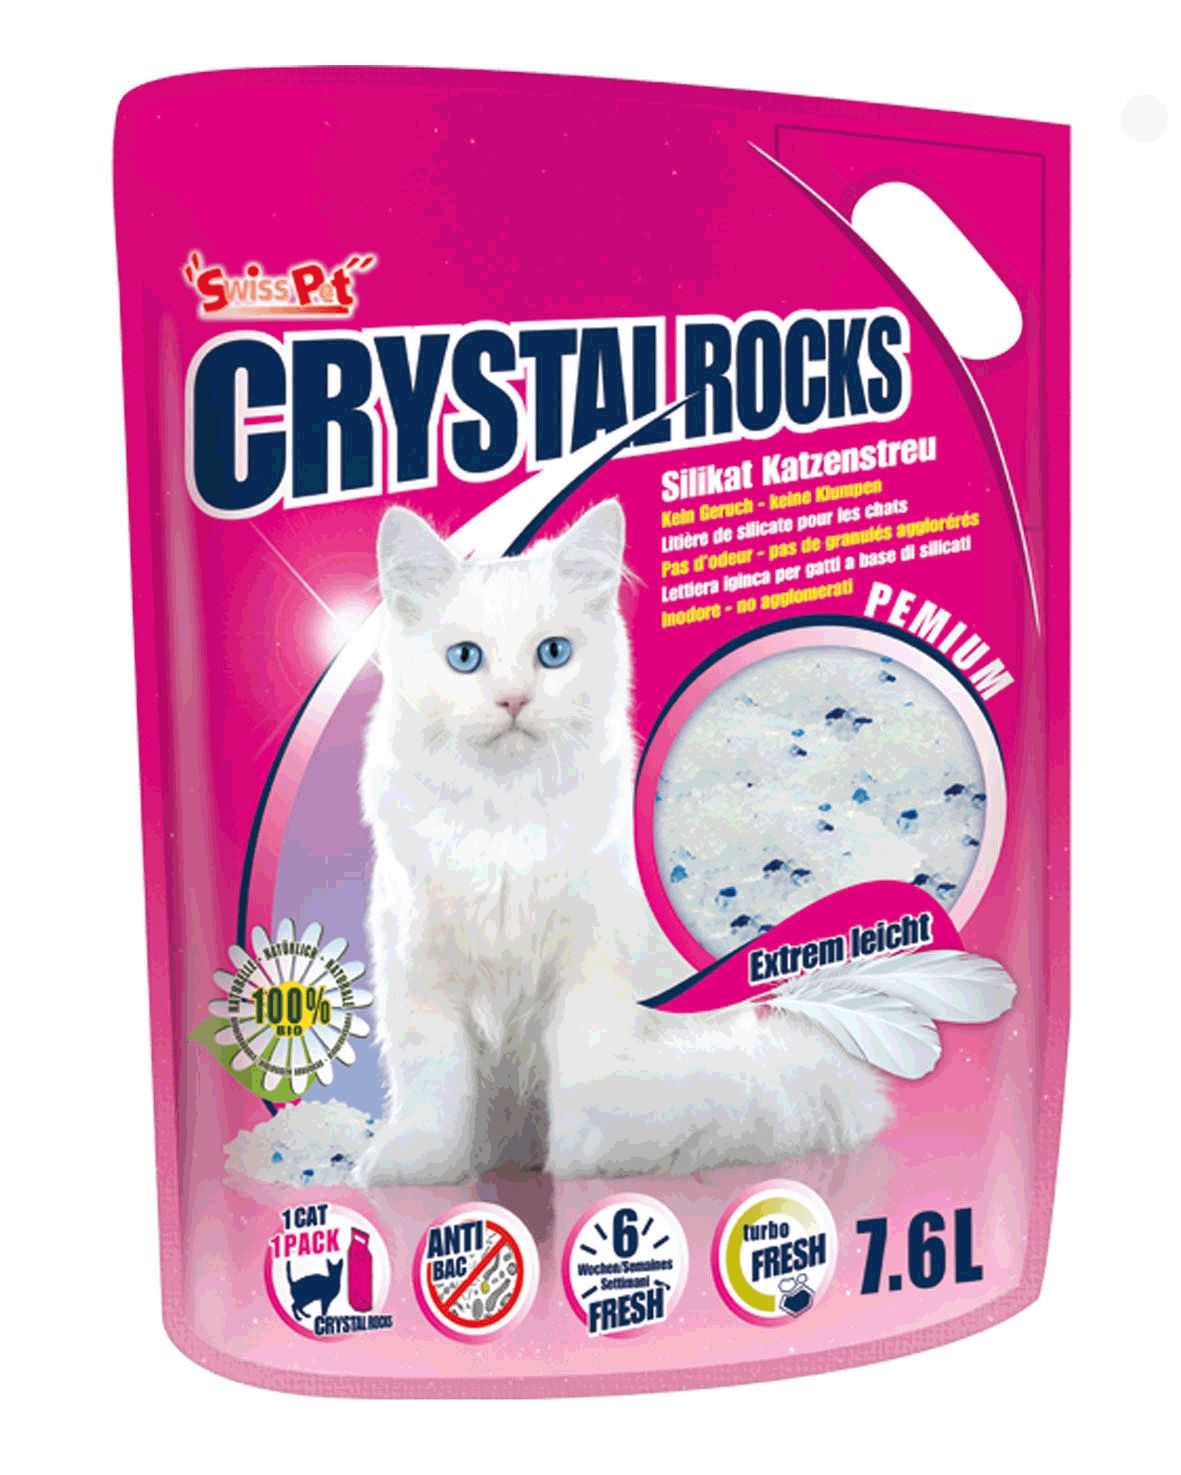 Crystal Rocks Katzenstreu